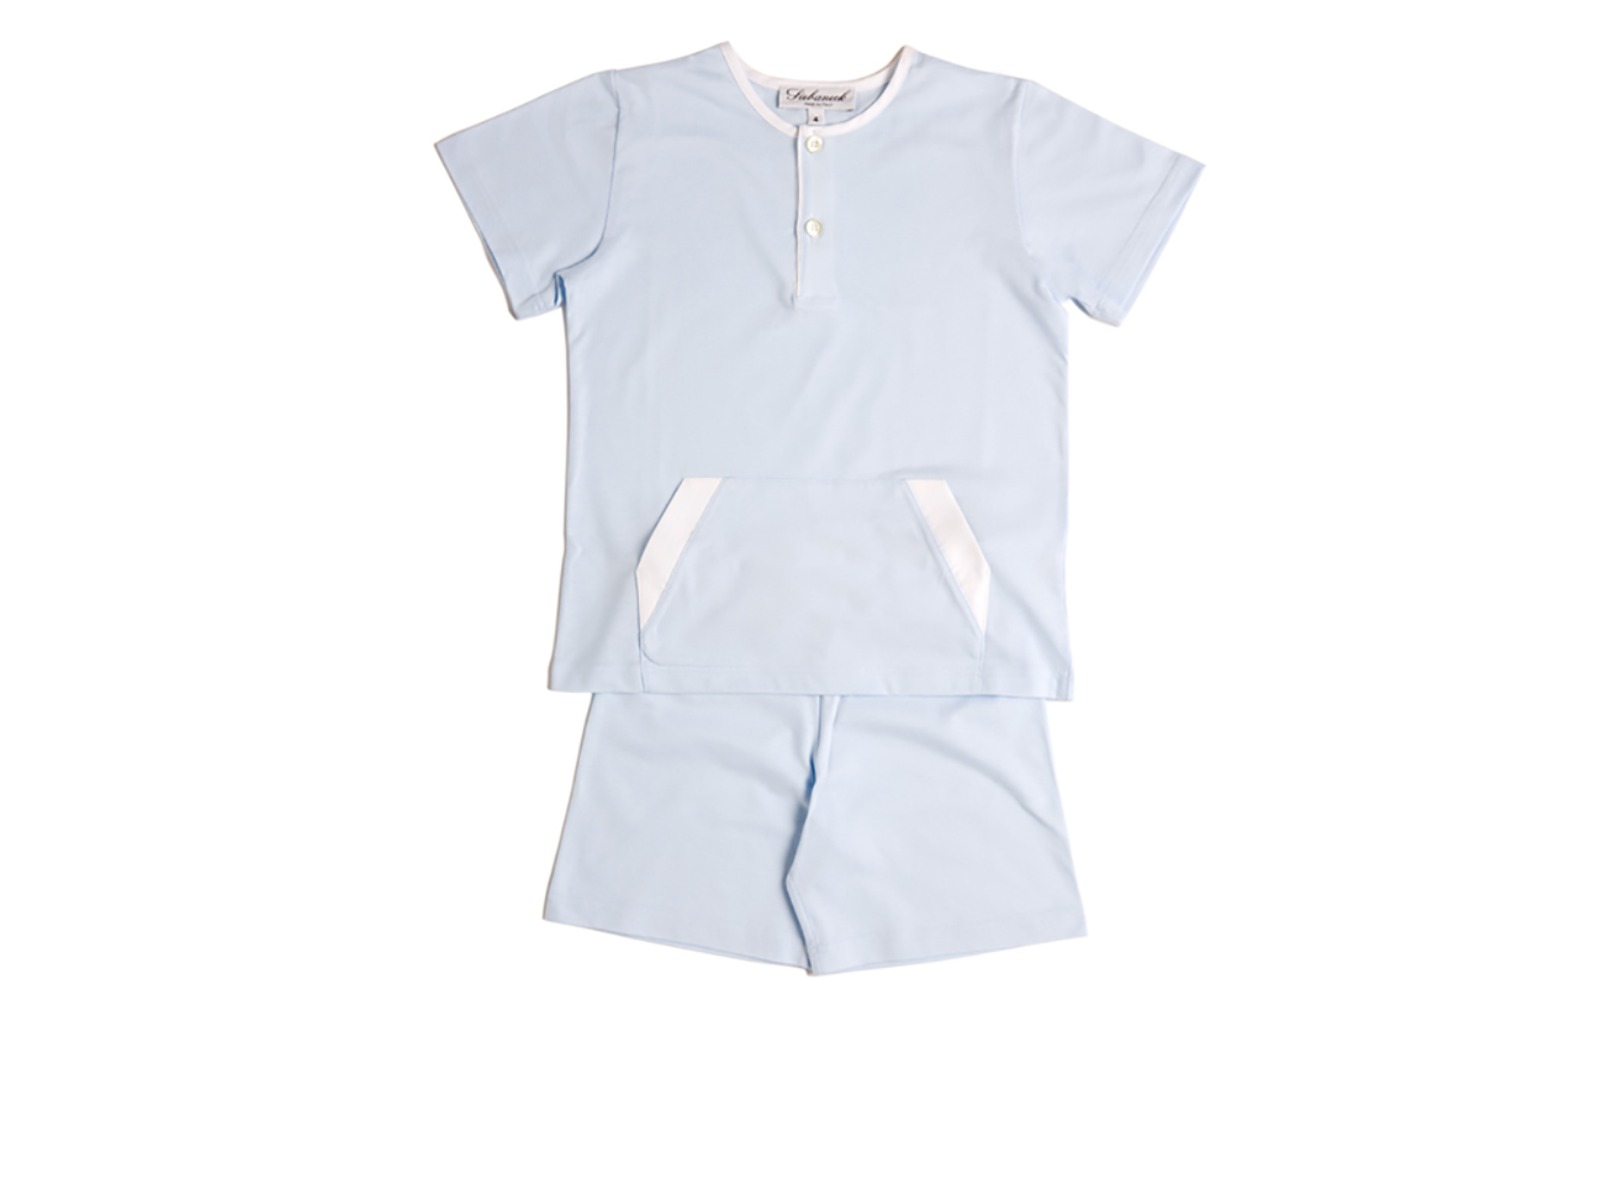 Siebaneck, i pigiami artigianali: - bambino - mod. 122 azzurro/bianco